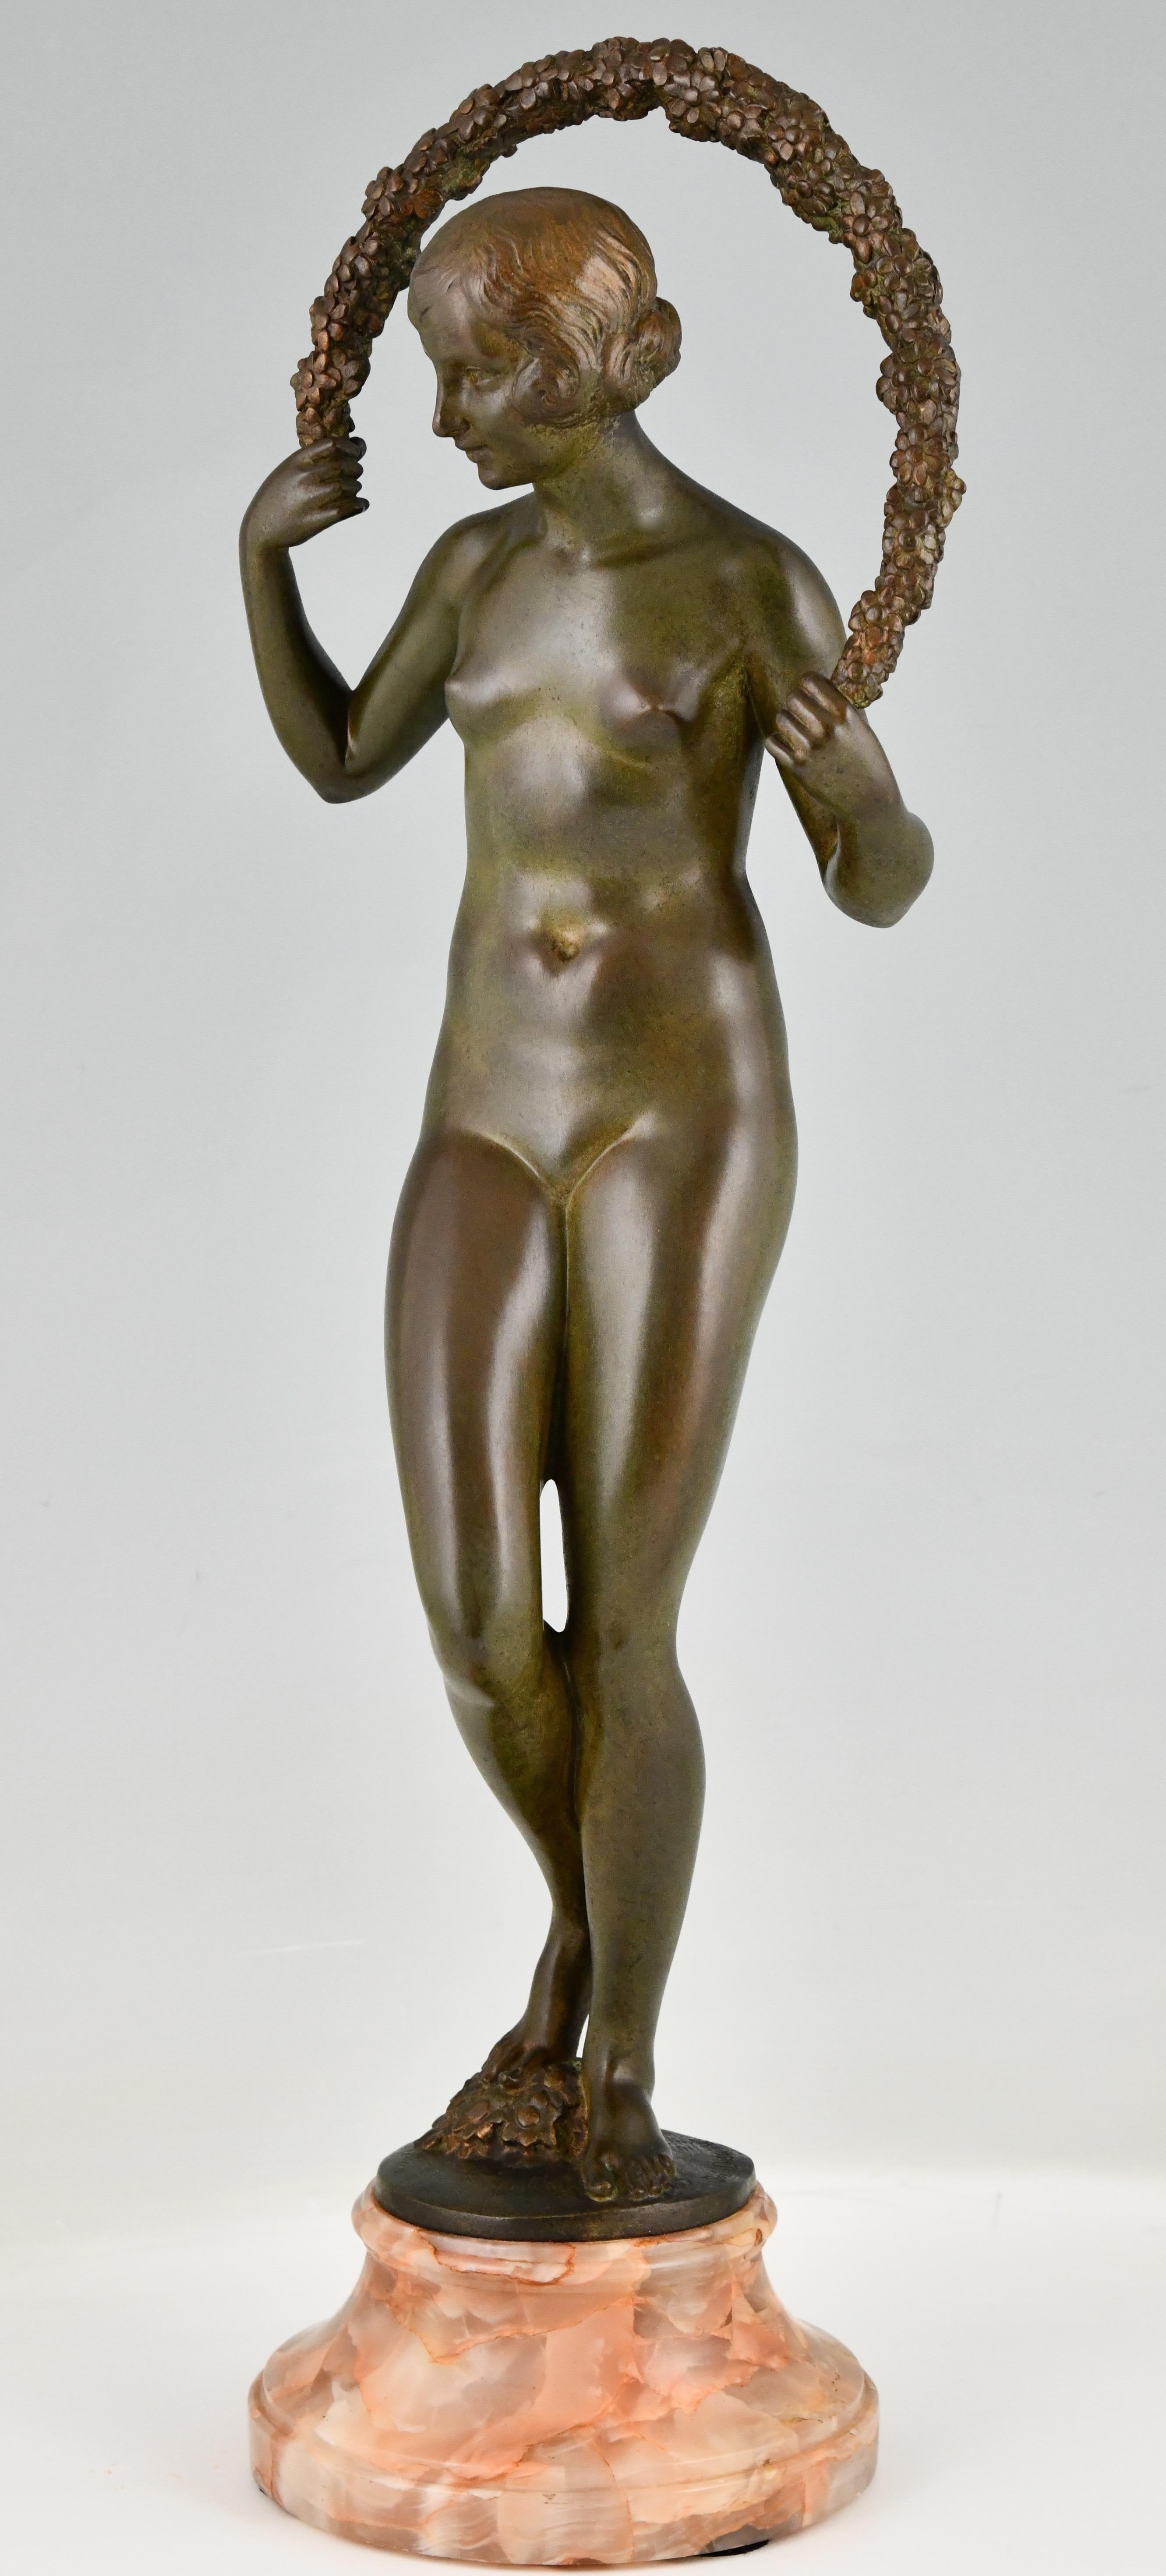 Art Deco Bronze Sculpture Nude with Garland by Joe Descomps Cormier 1925 For Sale 3